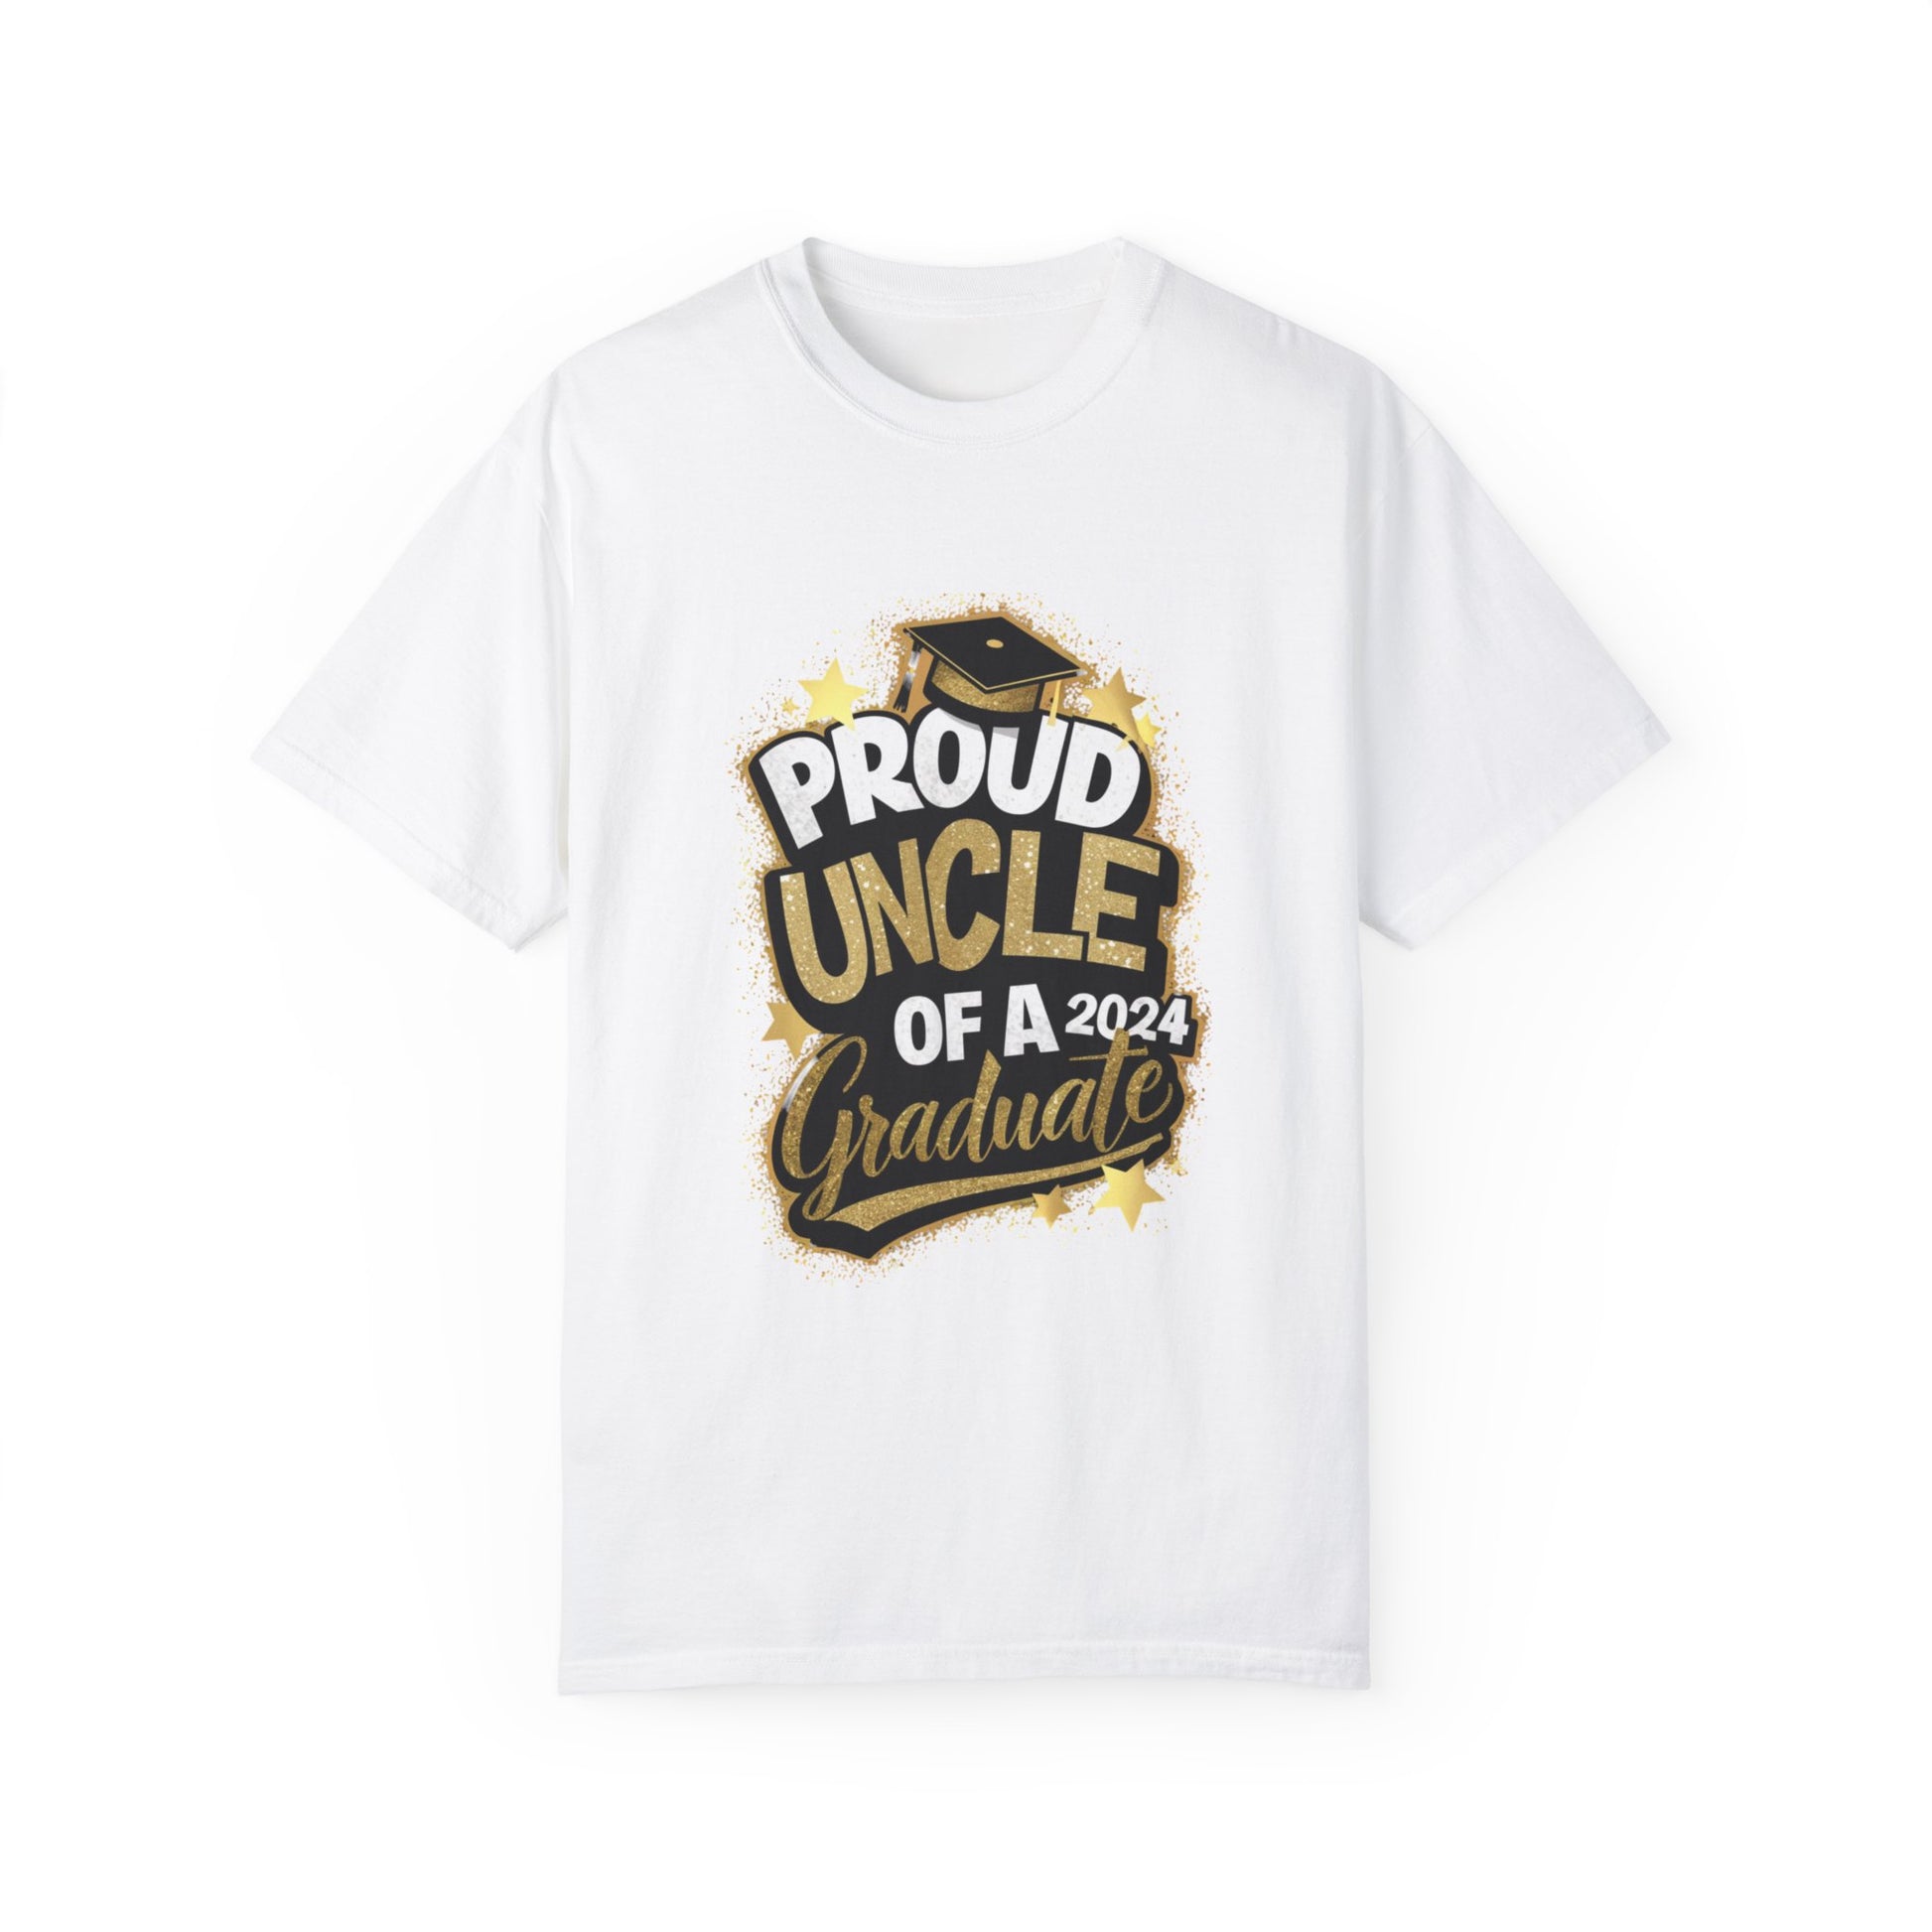 Proud Uncle of a 2024 Graduate Unisex Garment-dyed T-shirt Cotton Funny Humorous Graphic Soft Premium Unisex Men Women White T-shirt Birthday Gift-3